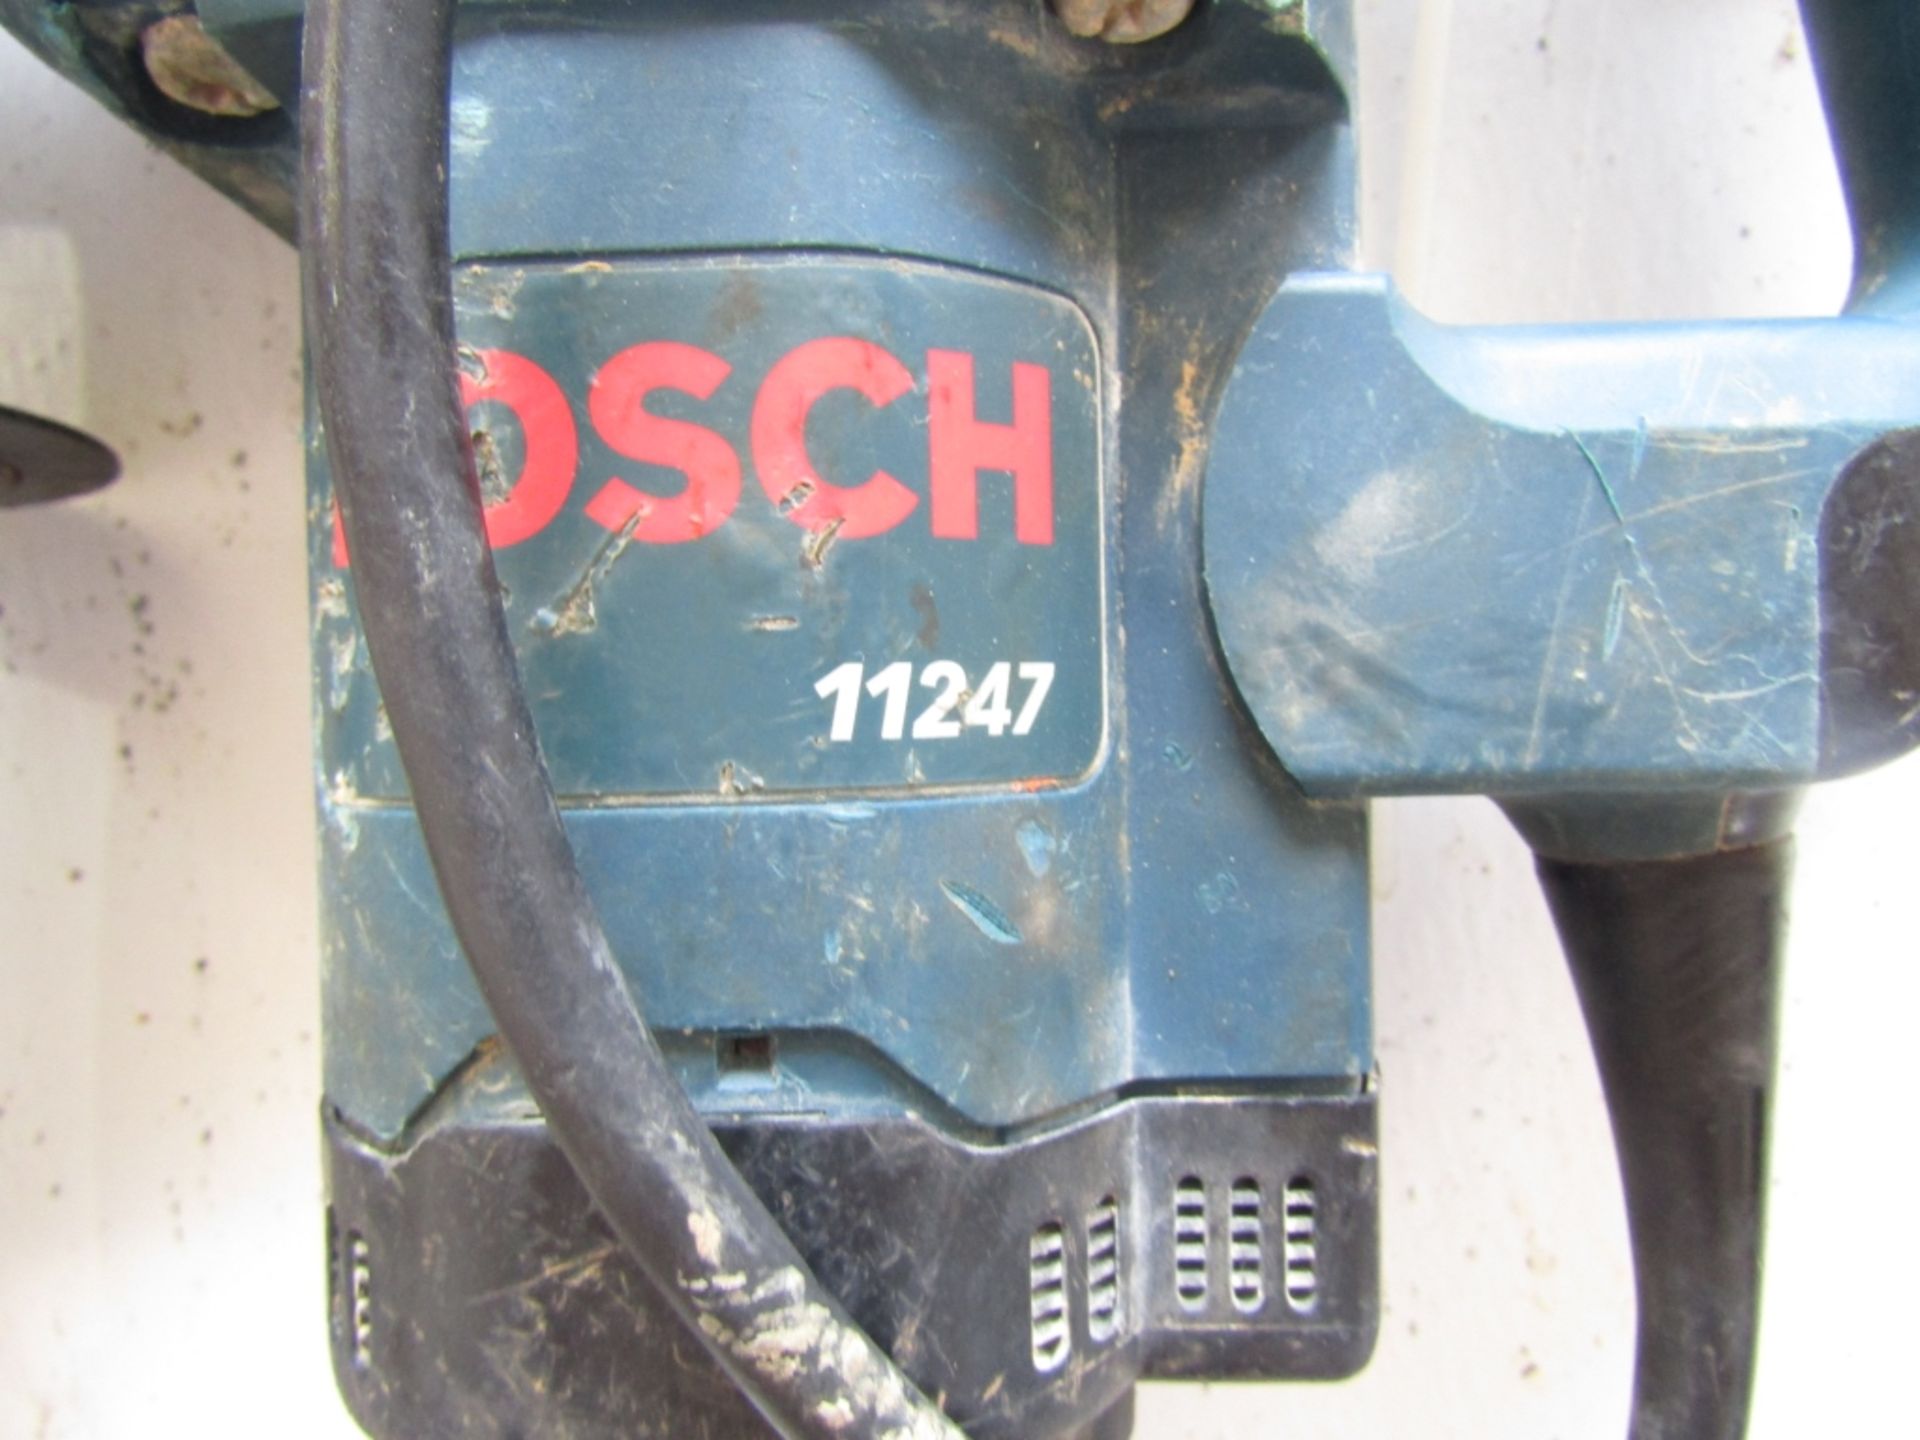 Bosch Hammer Drill w/bits, Model #11247 Serial #811247 - Image 2 of 3